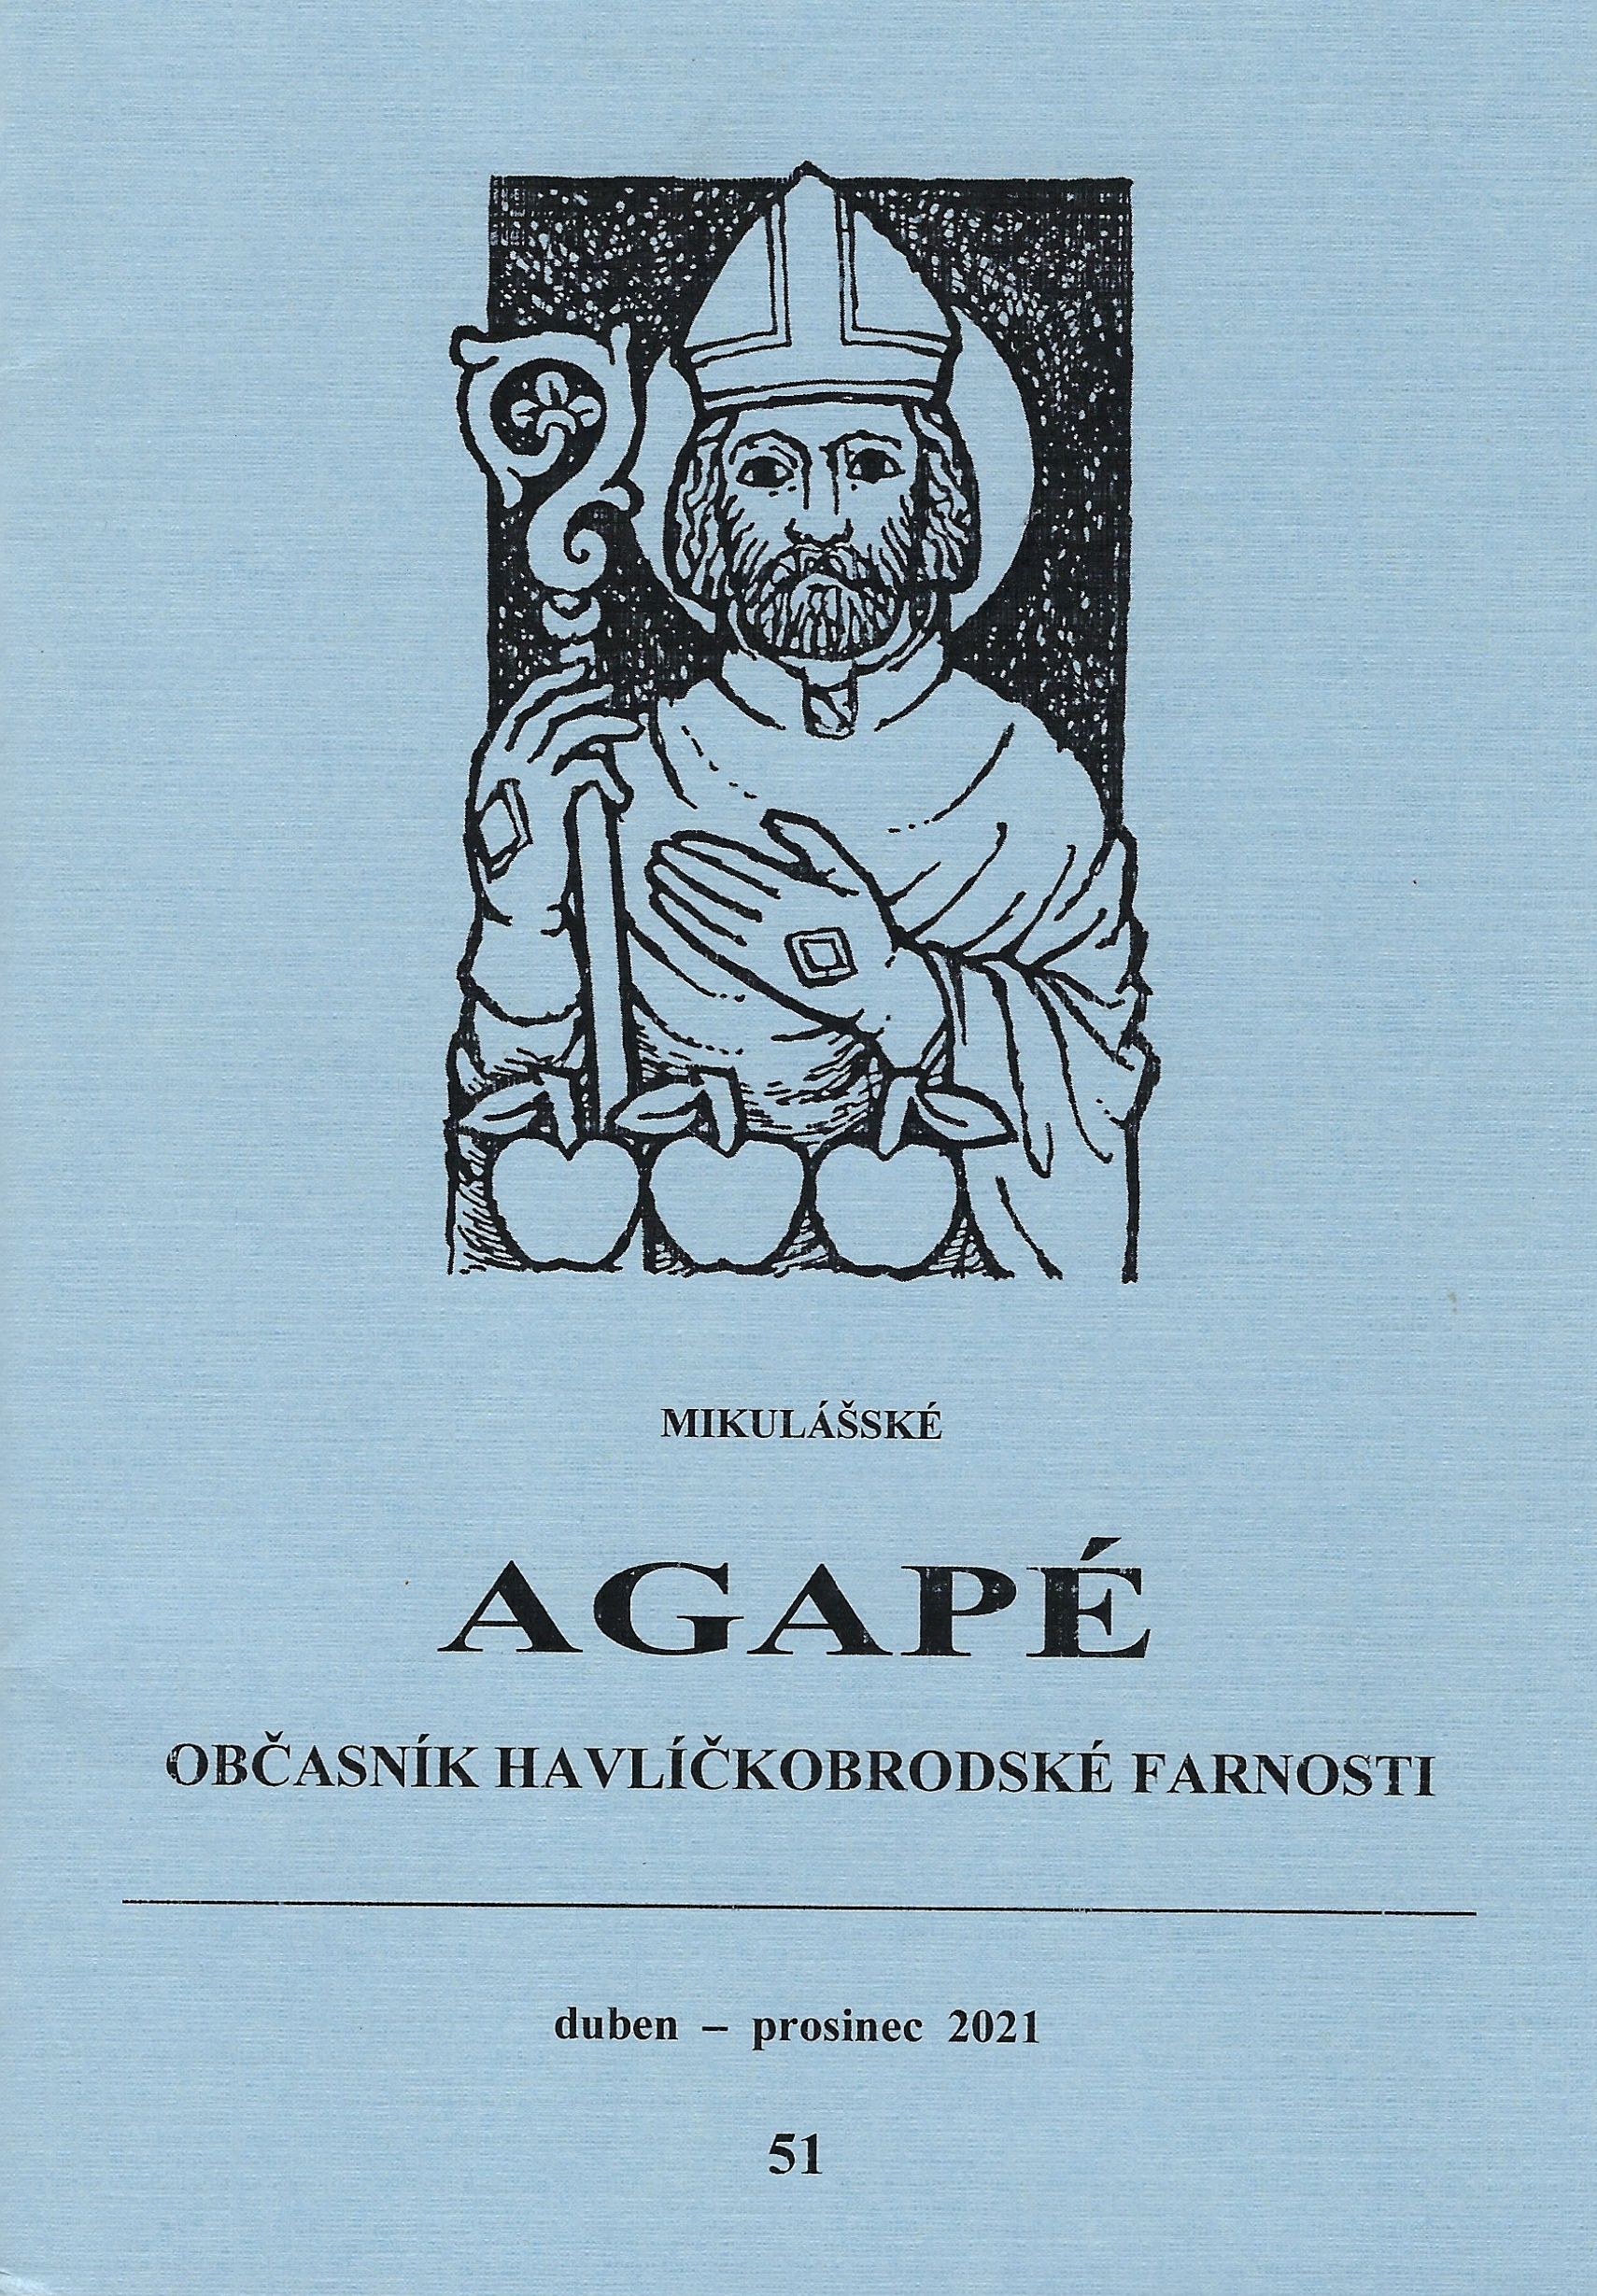 Mikulášské agapé